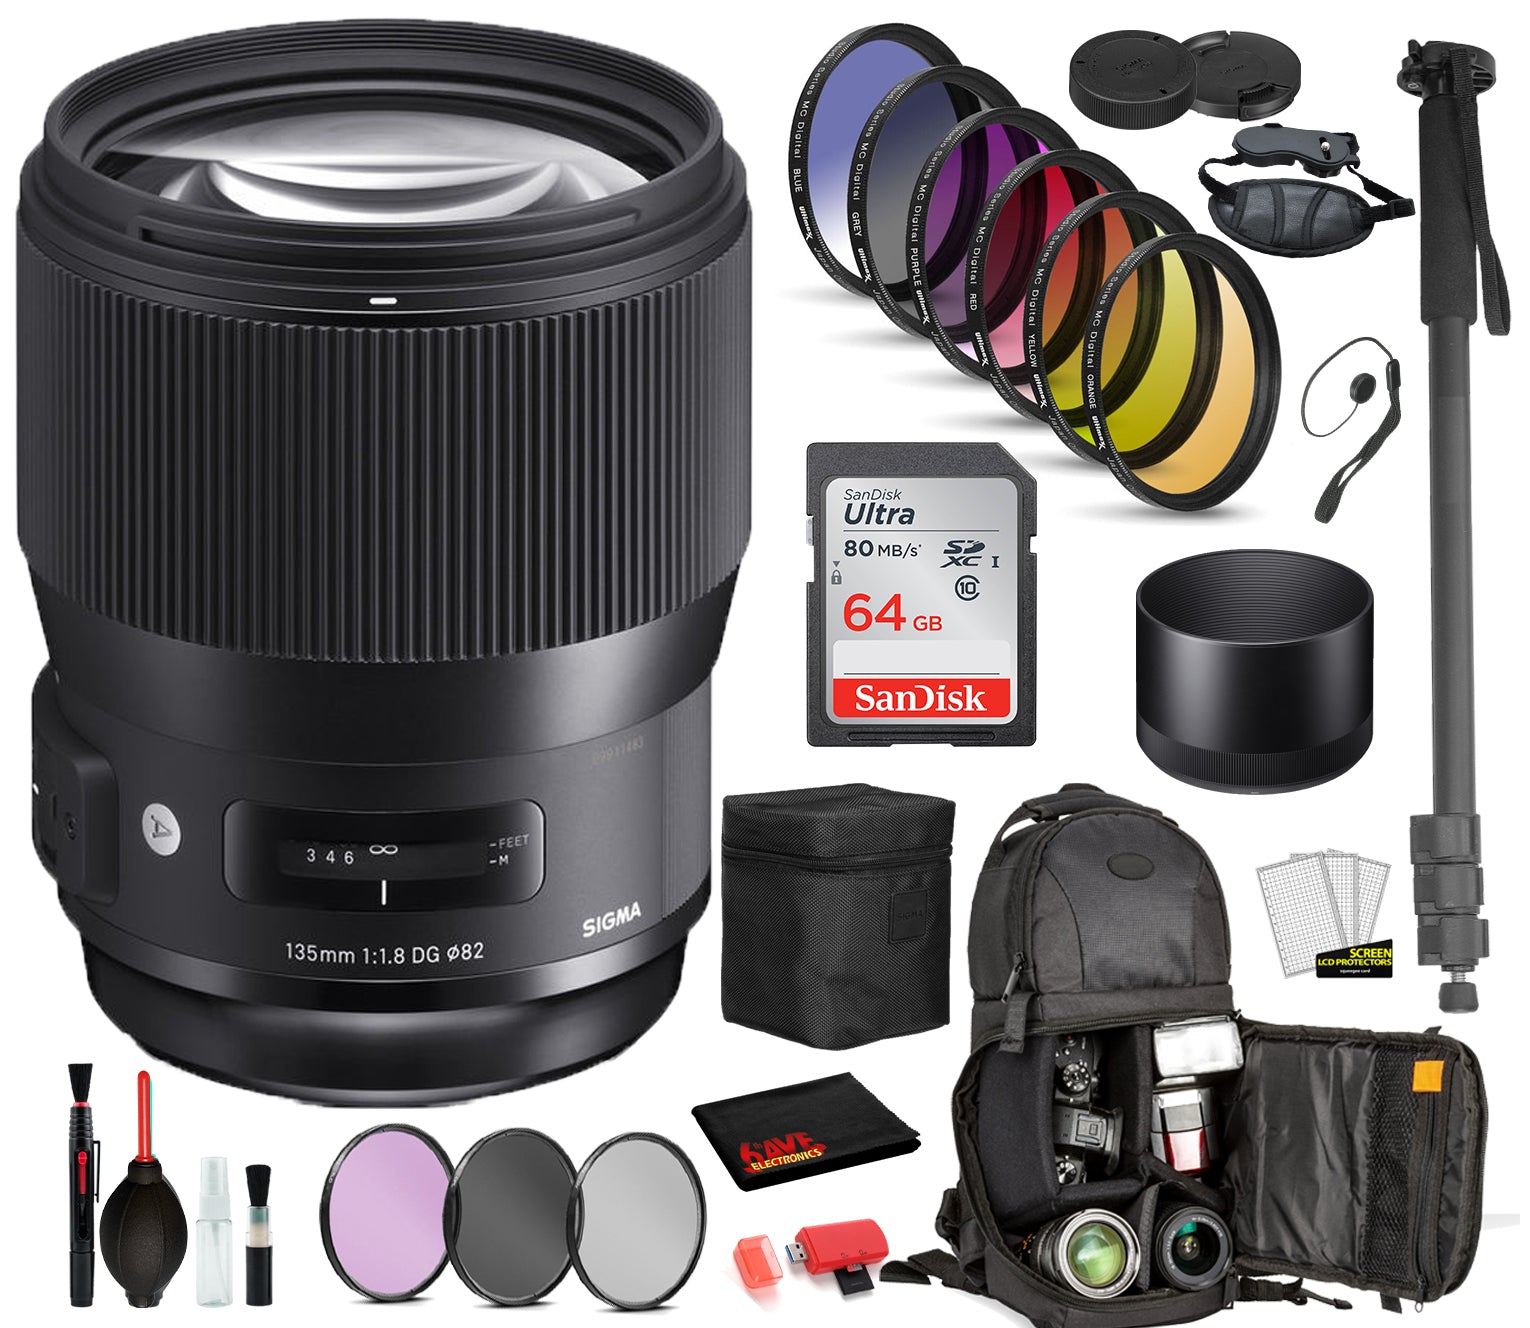 Sigma 135mm f/1.8 DG HSM Art Lens for Nikon F with Bundle: Sandisk 64gb SD Card, 9PC Filter Kit + More